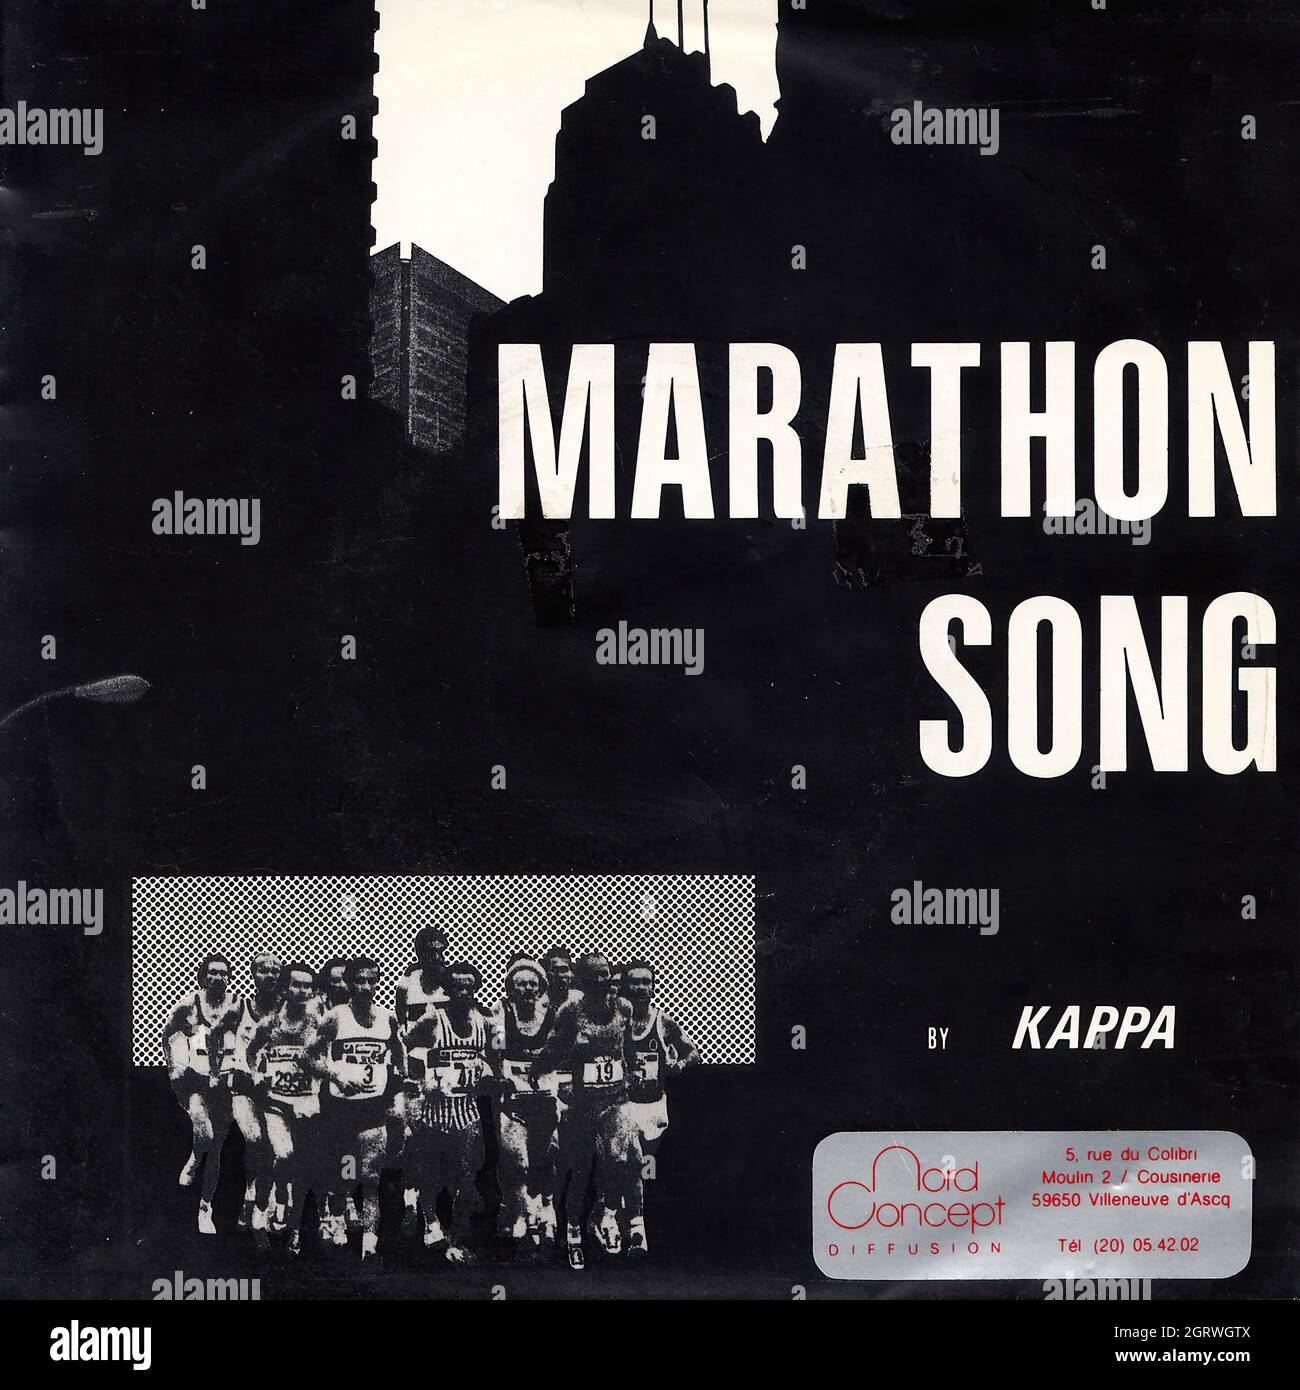 Kappa - Marathon song - Kappa's theme 45rpm - Vintage Vinyl Record Cover  Stock Photo - Alamy